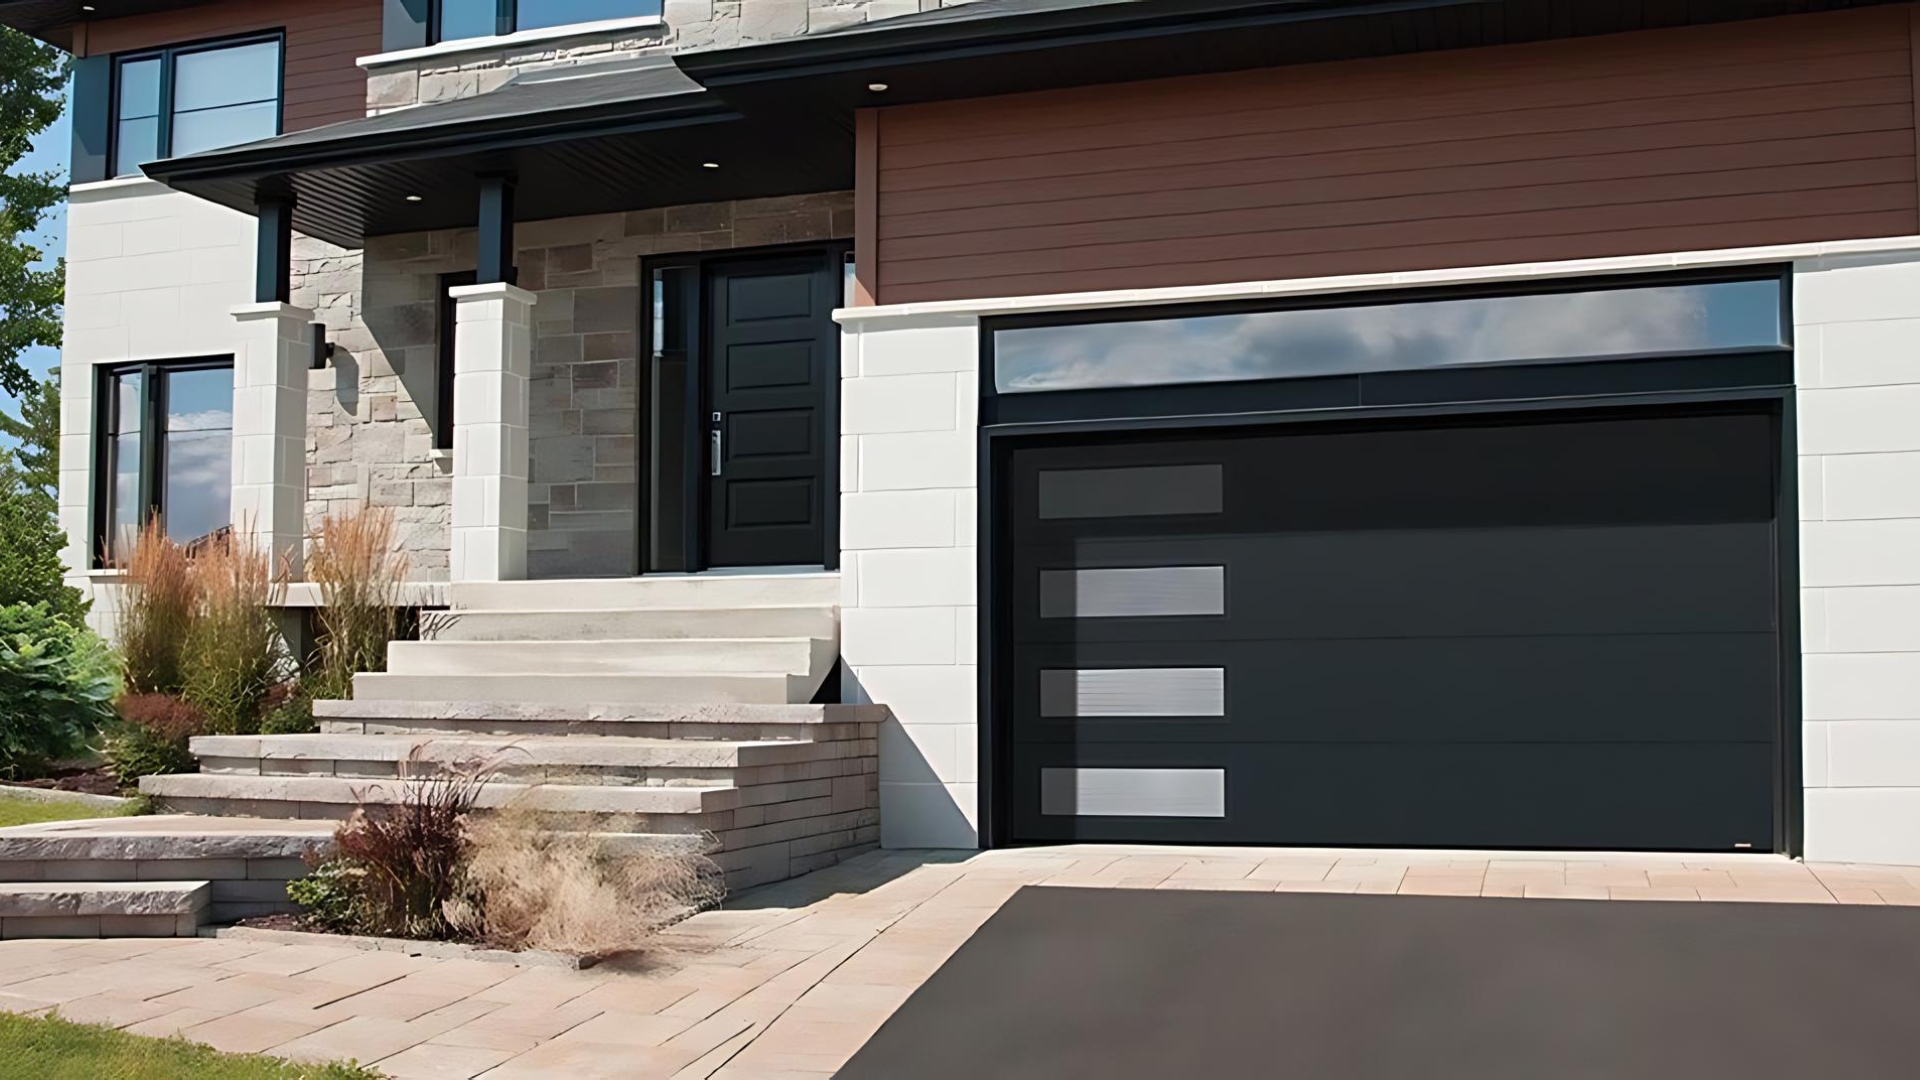 A residential garage door installed in a modern home